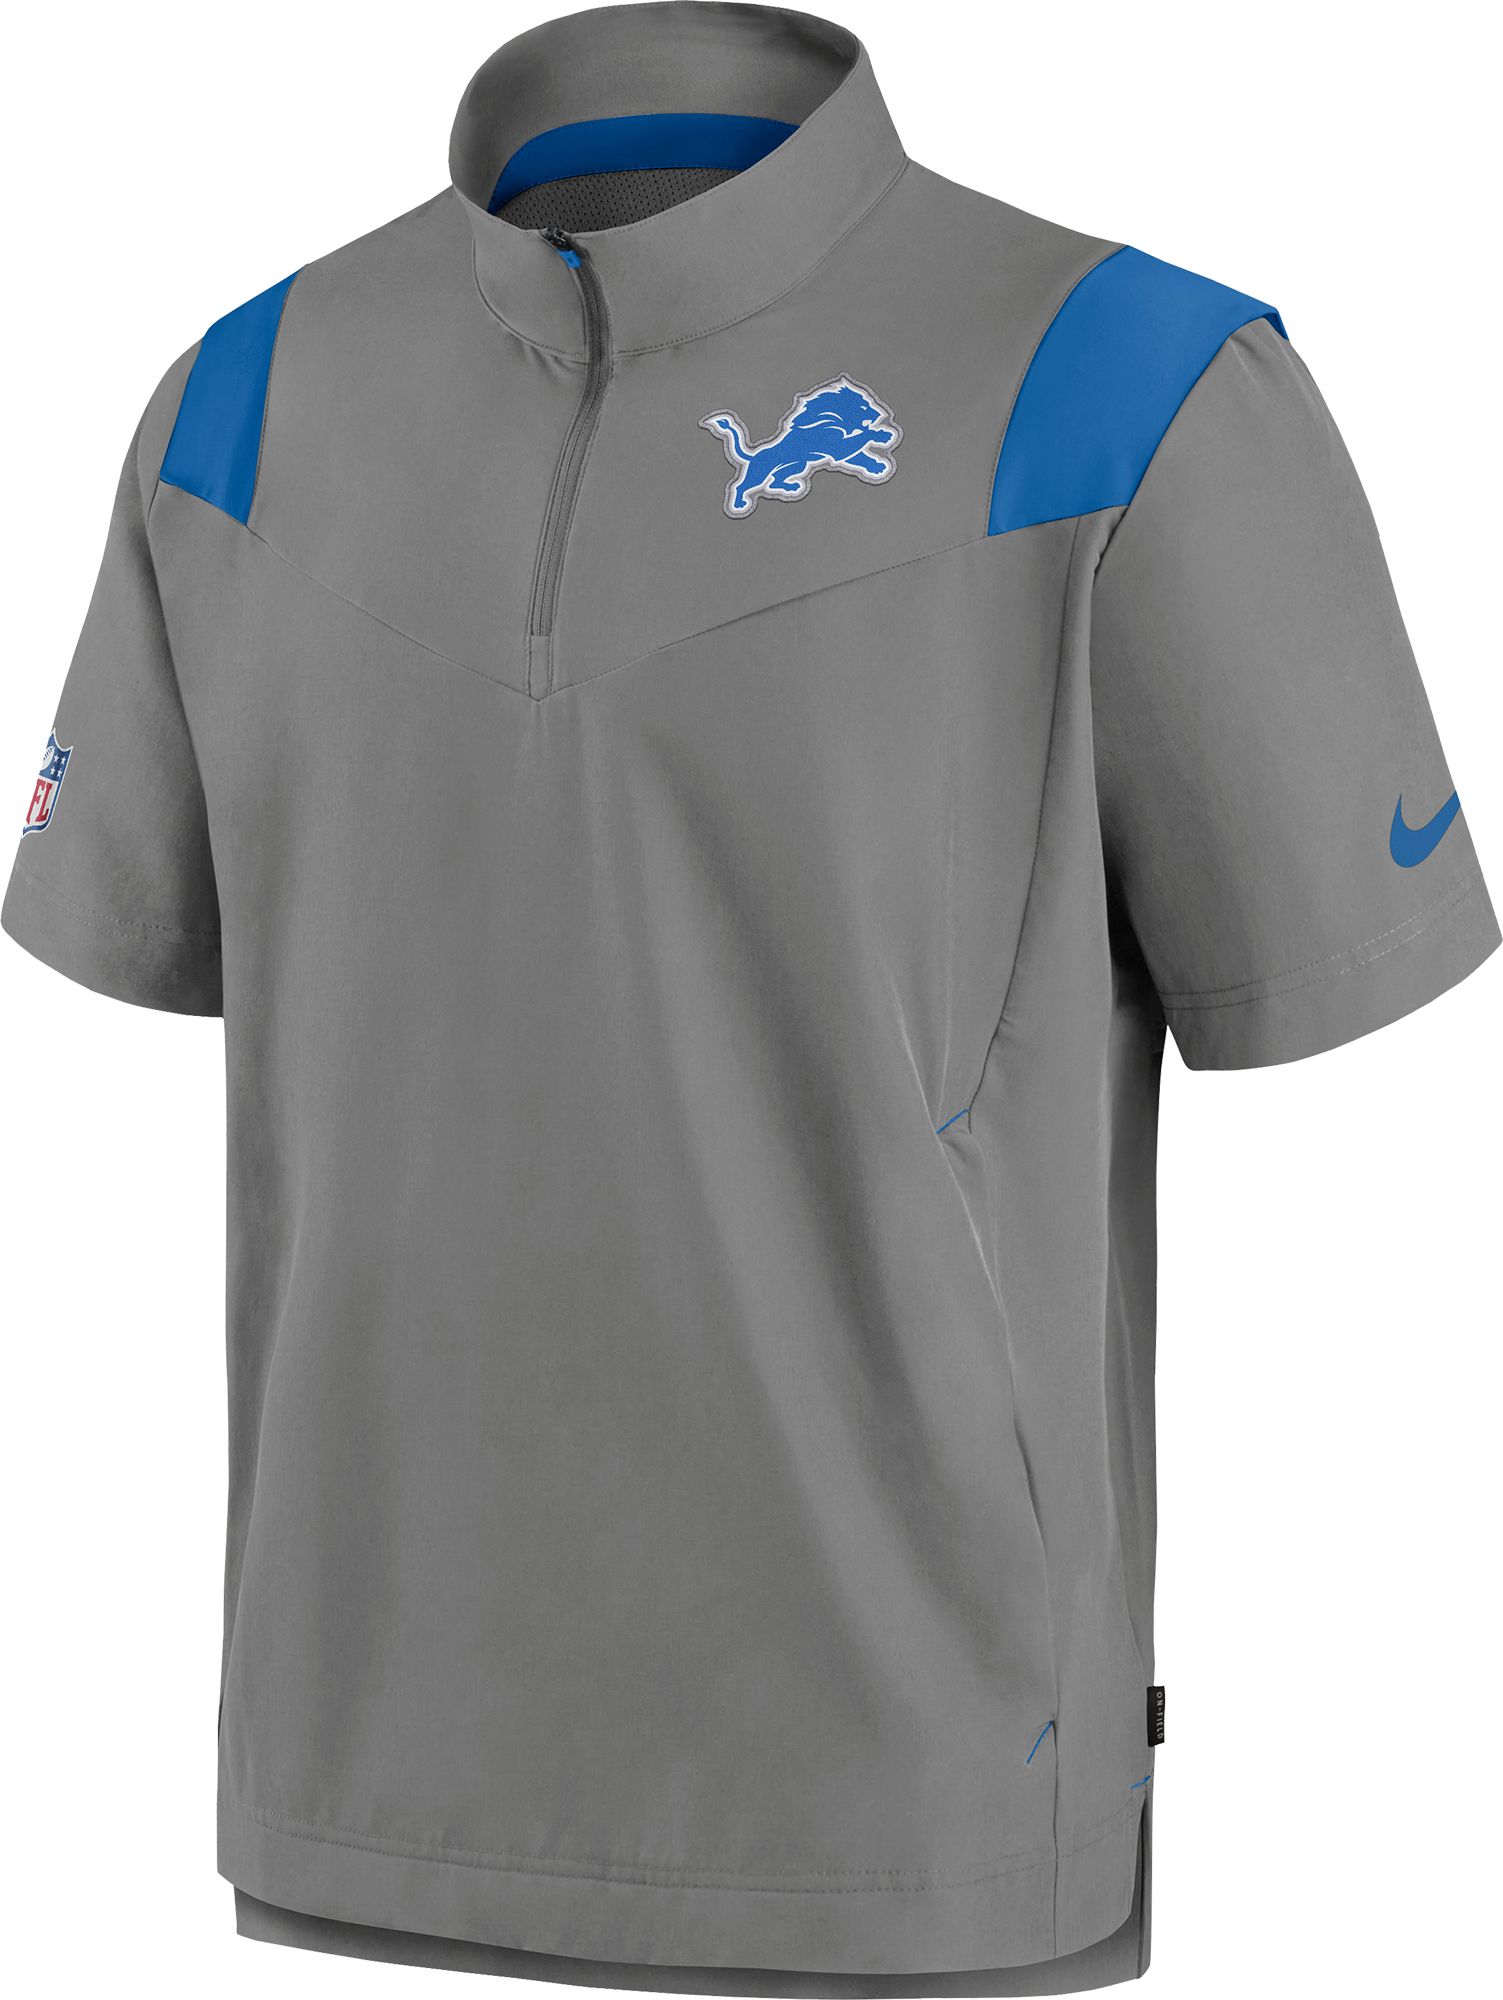 Nike / Men's Detroit Lions Sideline Coaches Short Sleeve Grey Jacket